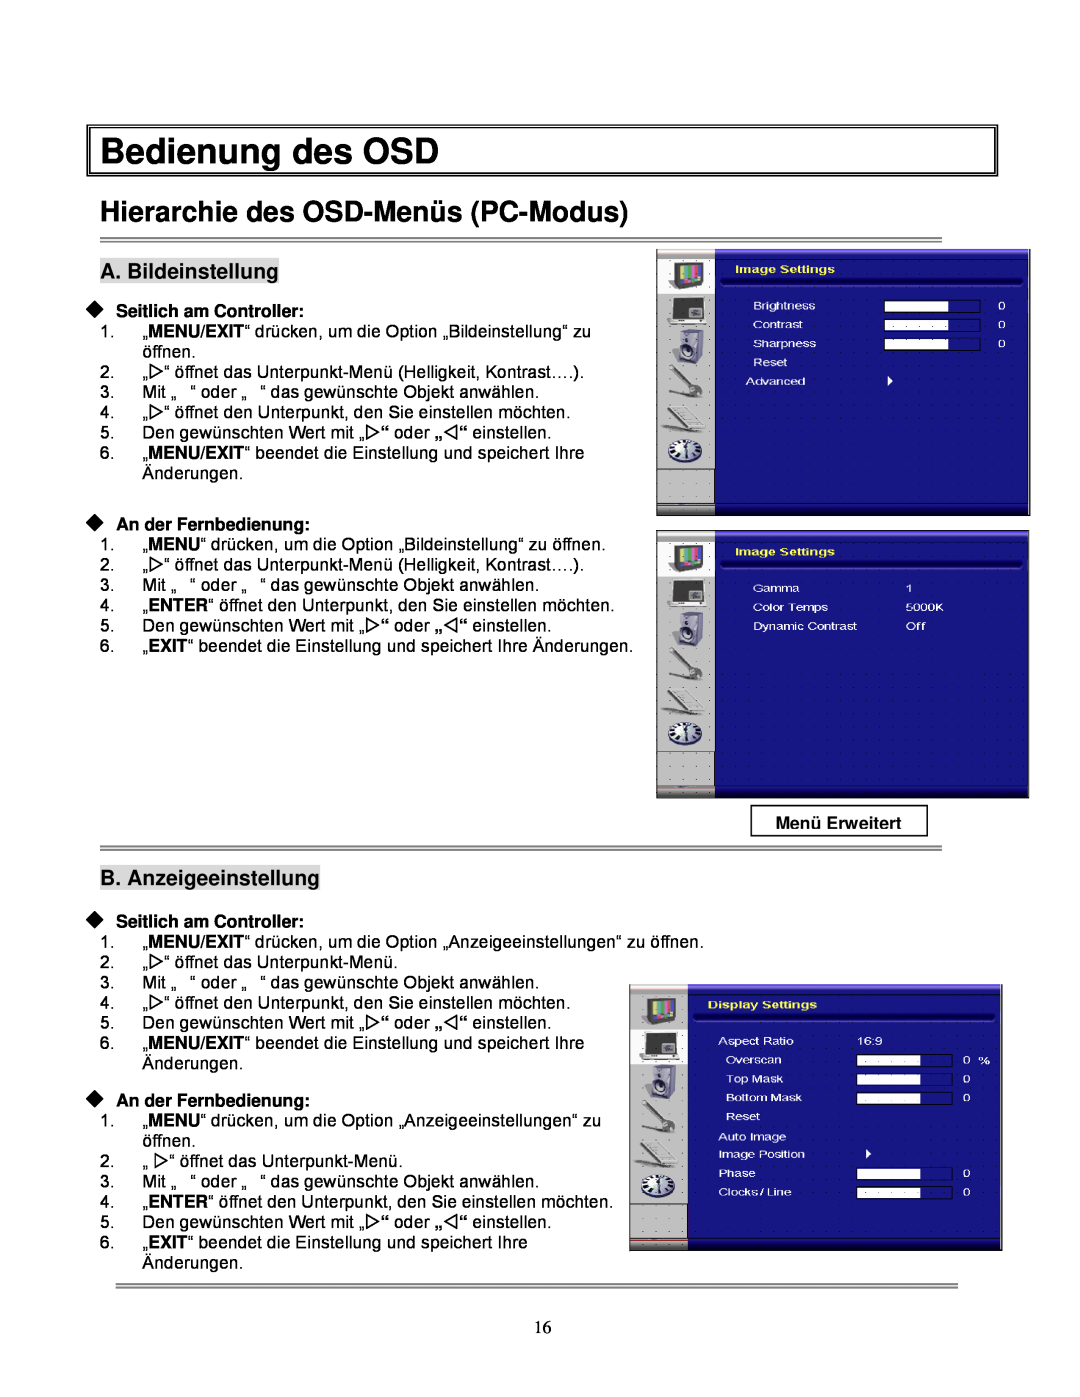 Planar PD370/PD420/PD470/PD520 Bedienung des OSD, Hierarchie des OSD-Menüs PC-Modus, A. Bildeinstellung, Menü Erweitert 